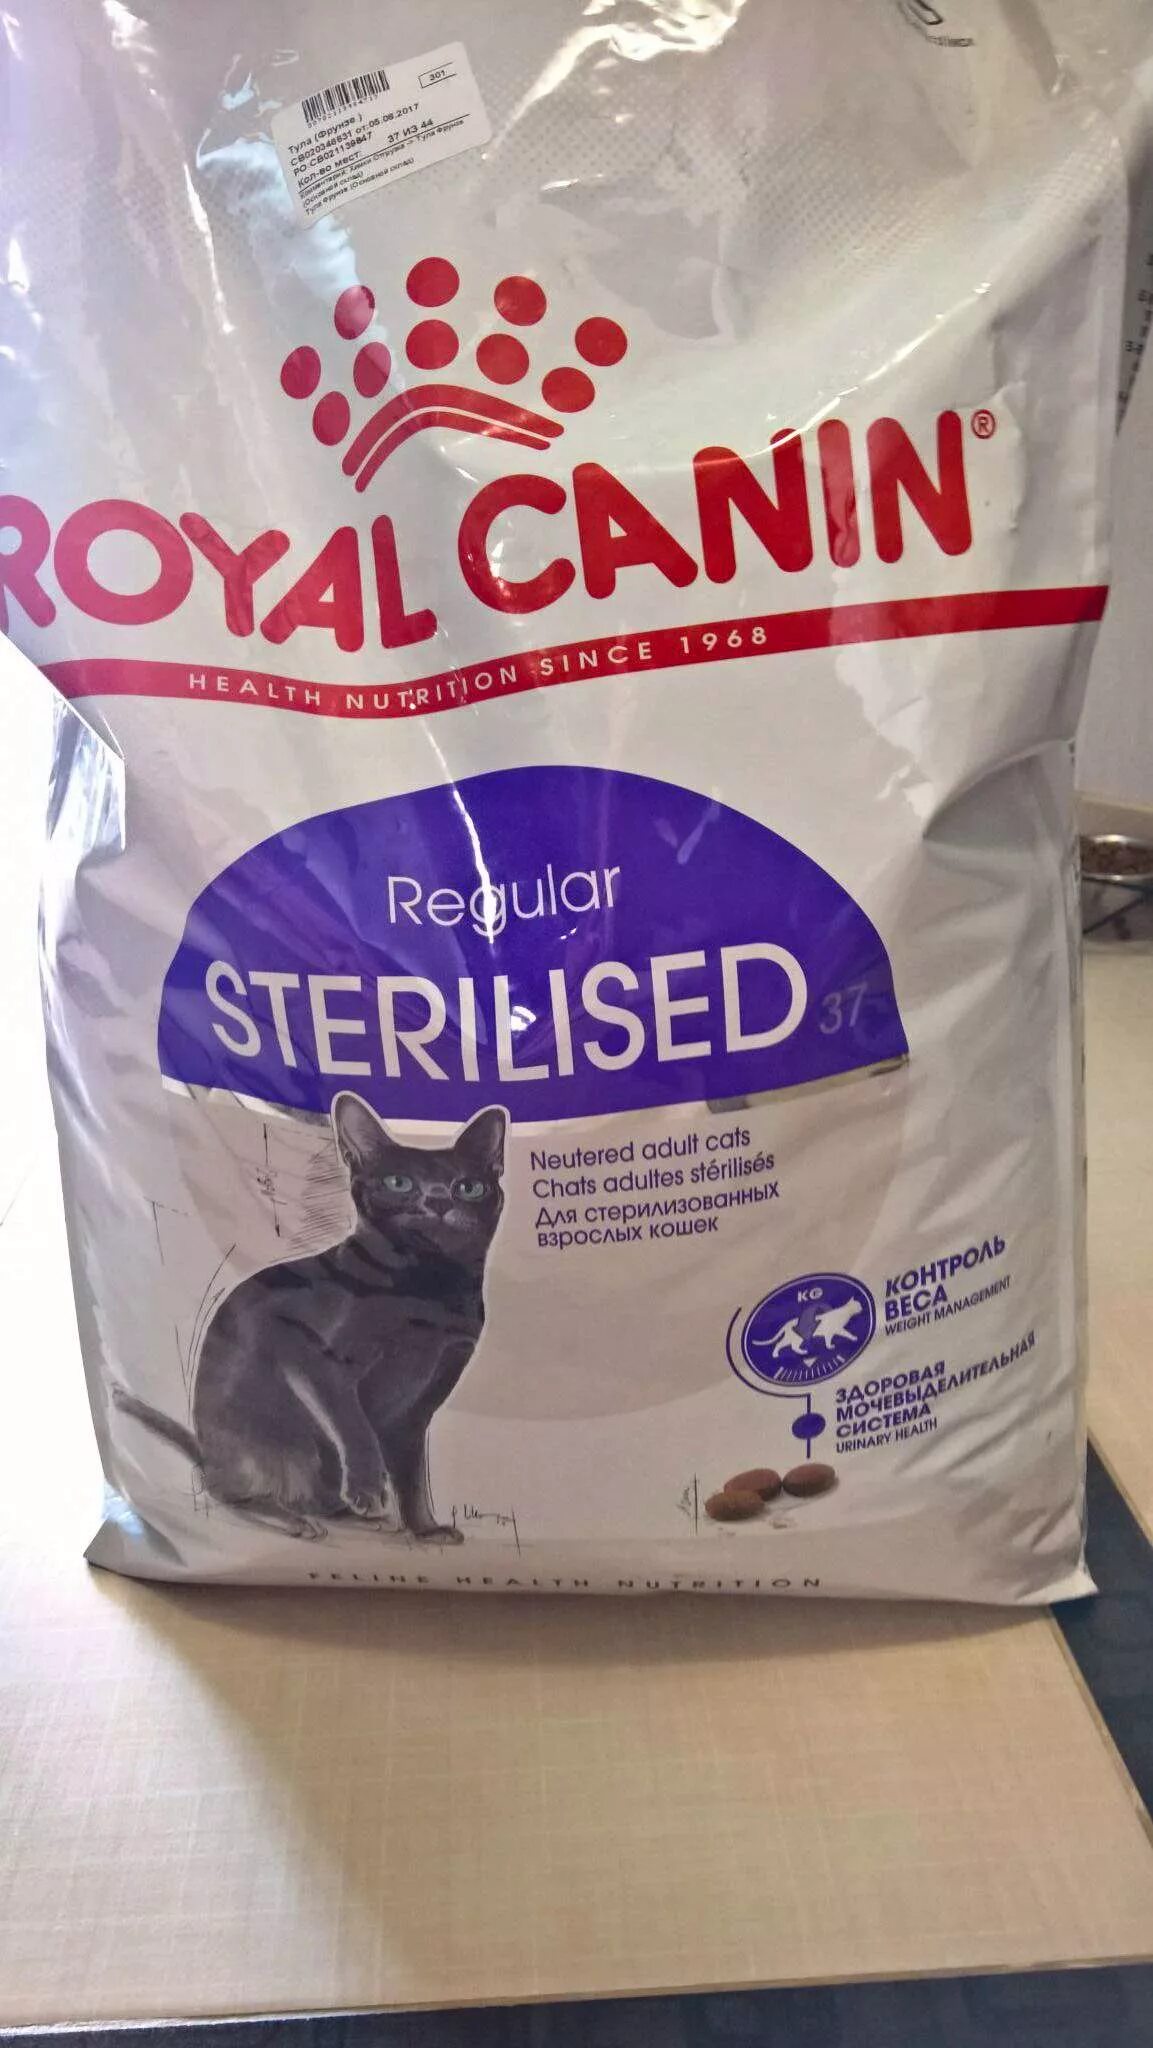 Royal canin для кошек sterilised 37. Роял Канин Sterilised 37. Сухой корм для кошек Royal Canin Sterilised 37, для стерилизованных, 10кг. Royal Canin корм сухой для кошек Стерилайзд 37. Корм для кошек Роял Канин для стерилизованных 10кг.